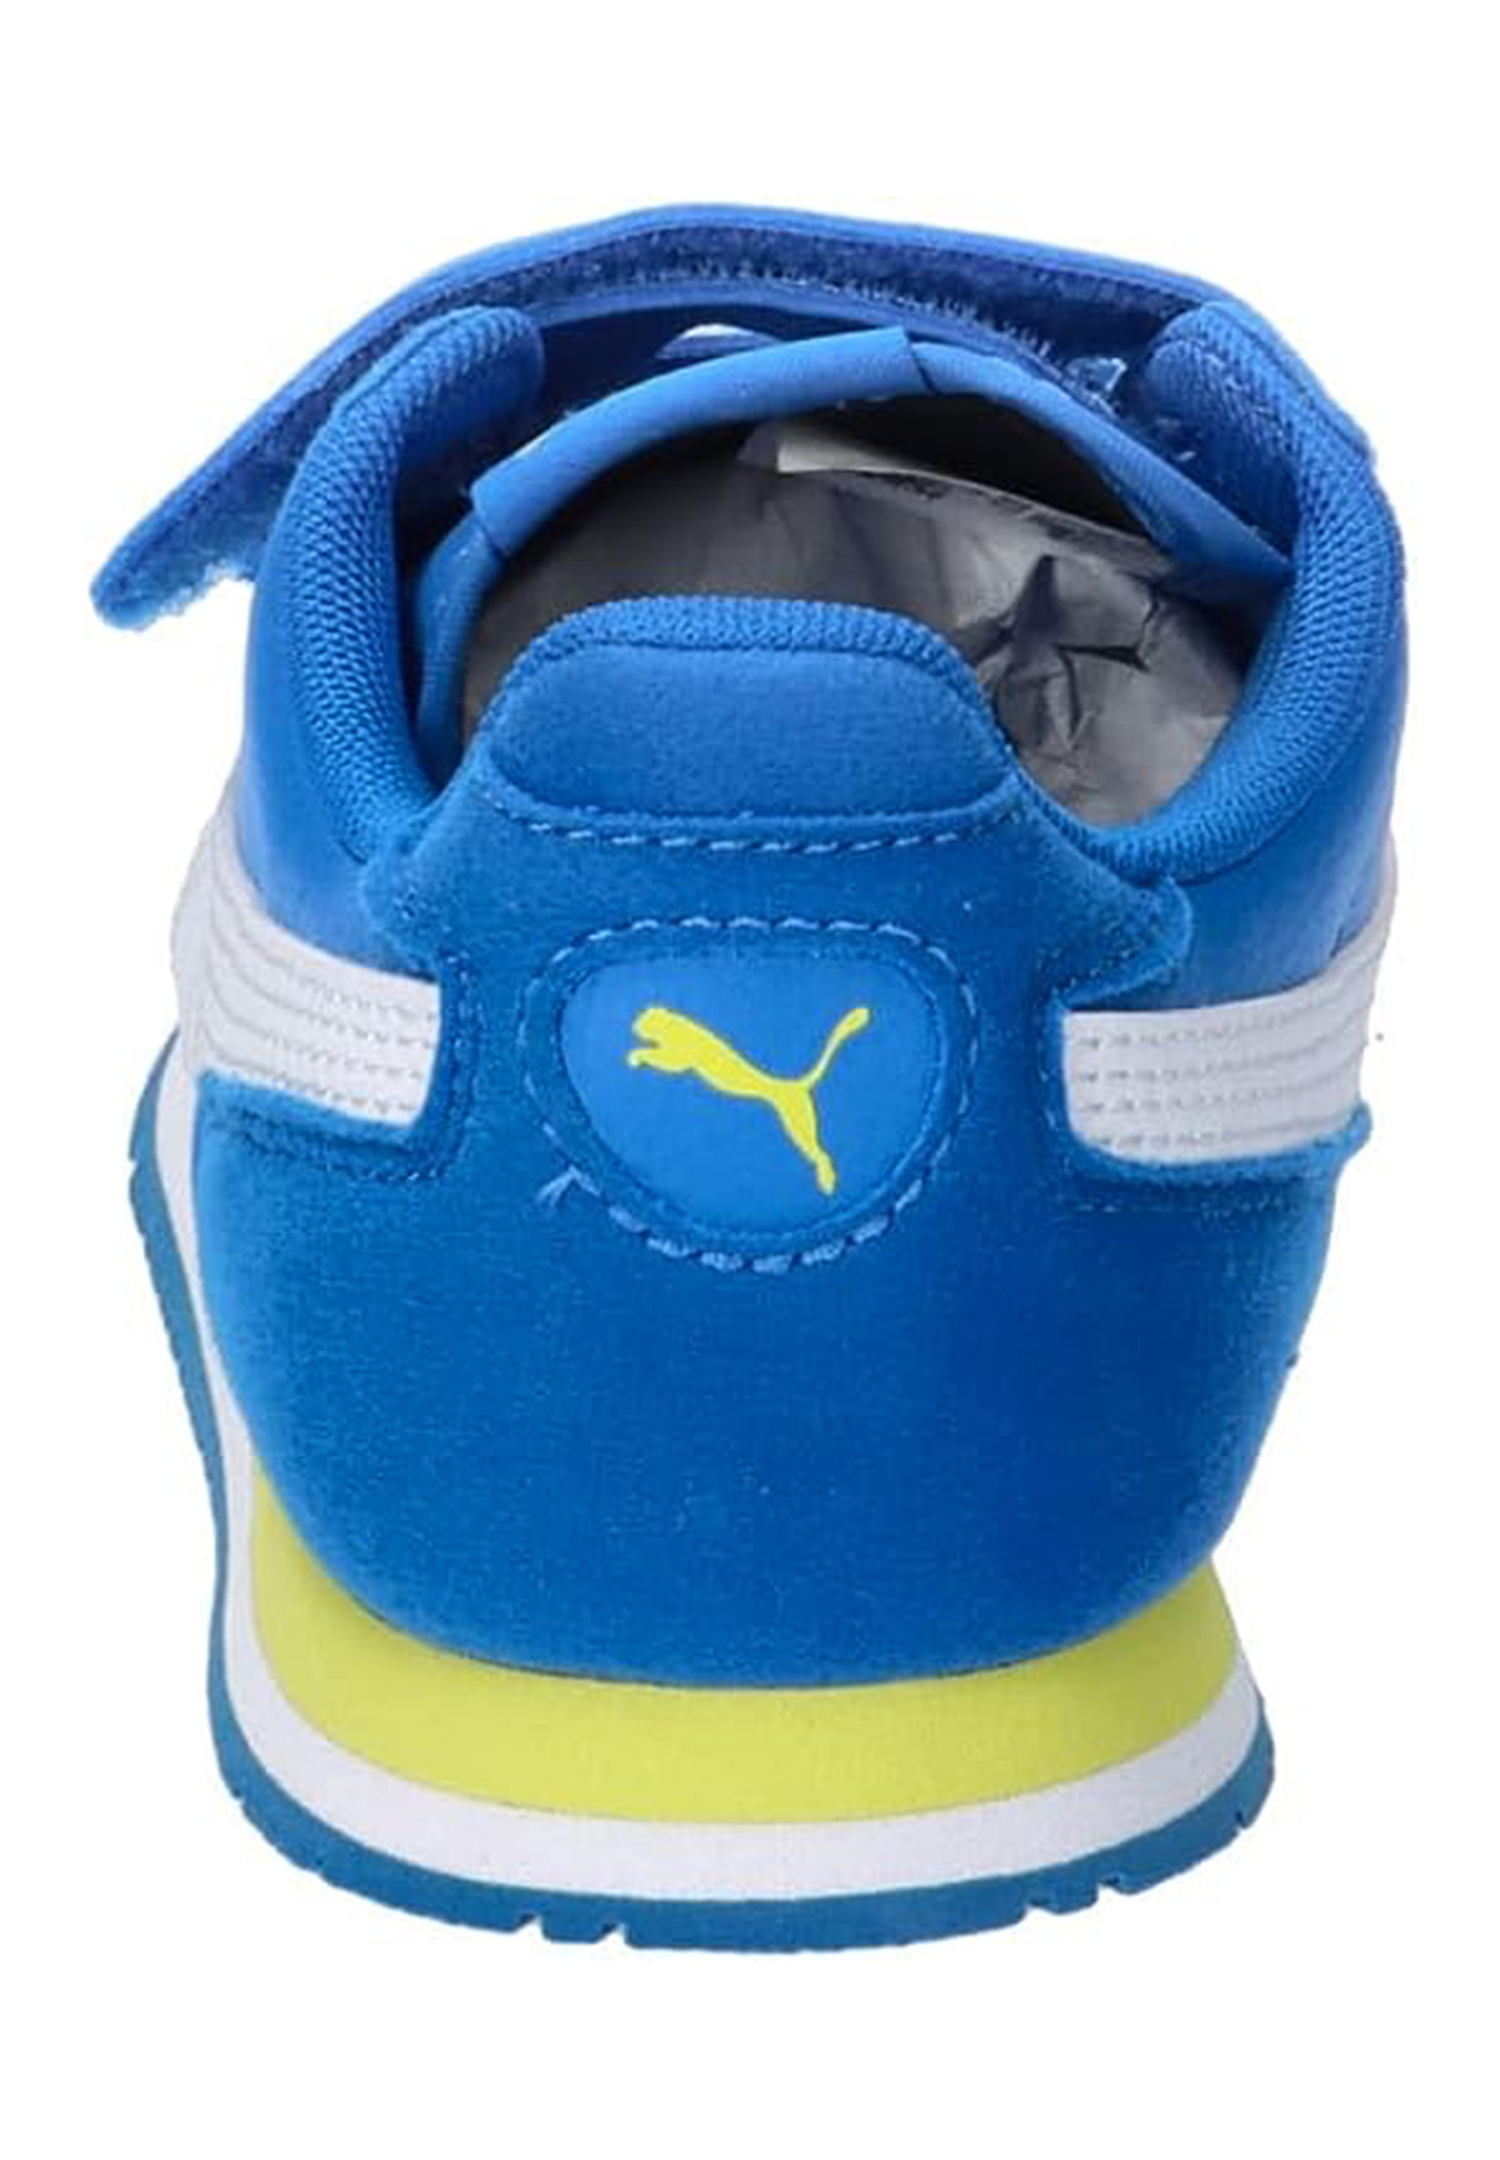 PUMA Cabana Racer SL  20 V PS Kinder Unisex Sneaker Turnschuhe 383730 Blau/gelb